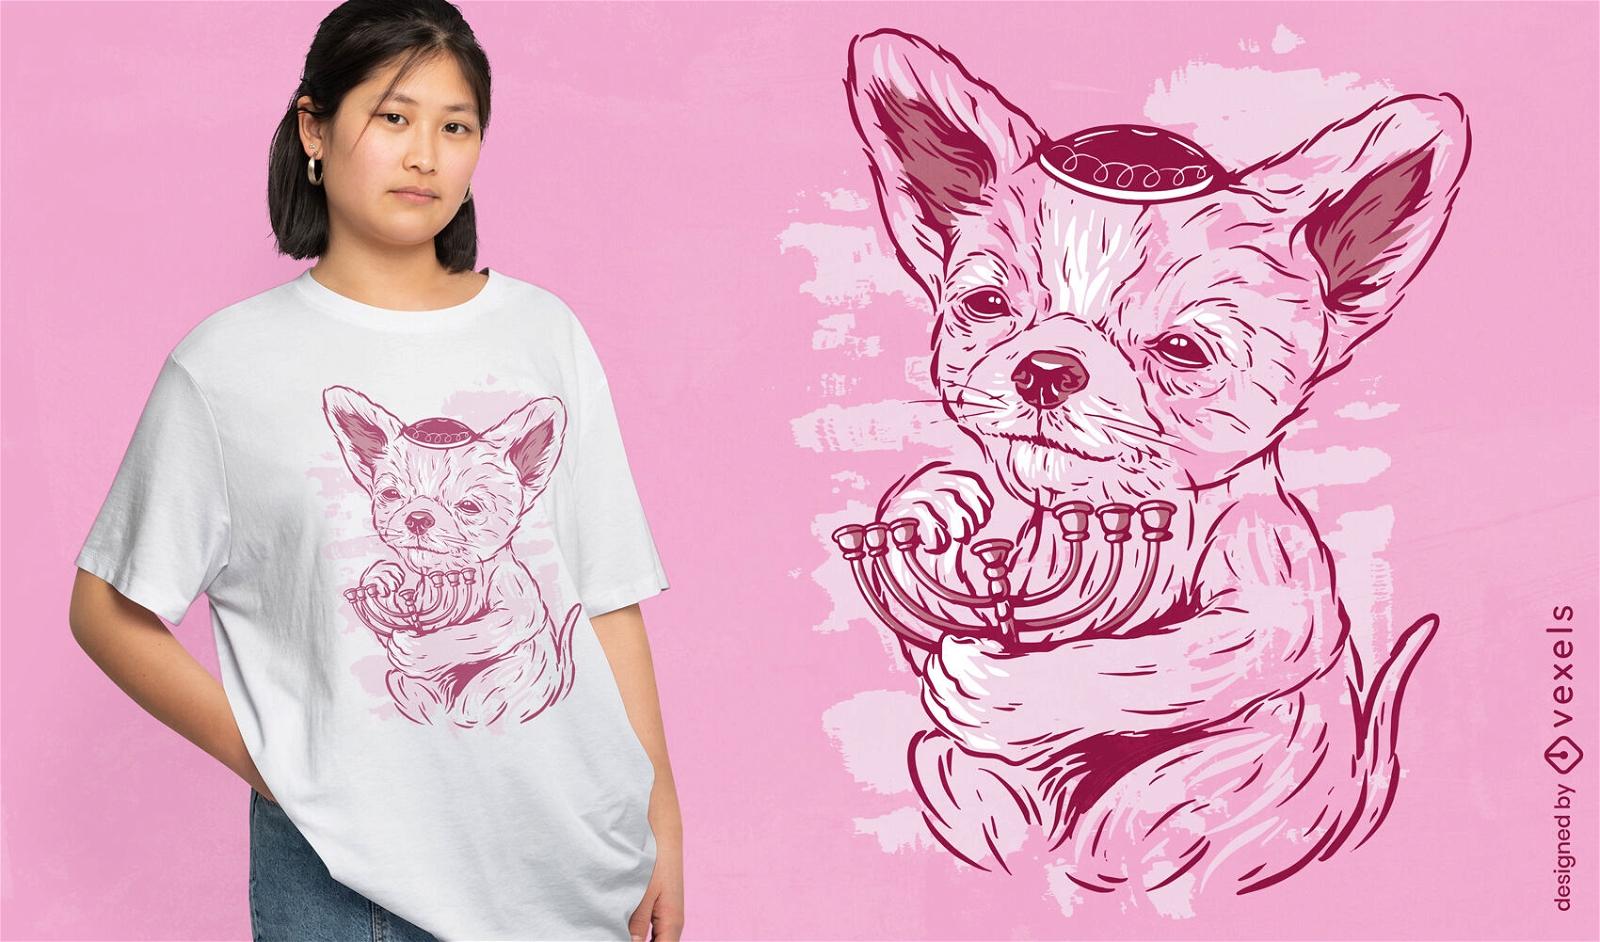 J?disches Chihuahua-T-Shirt-Design